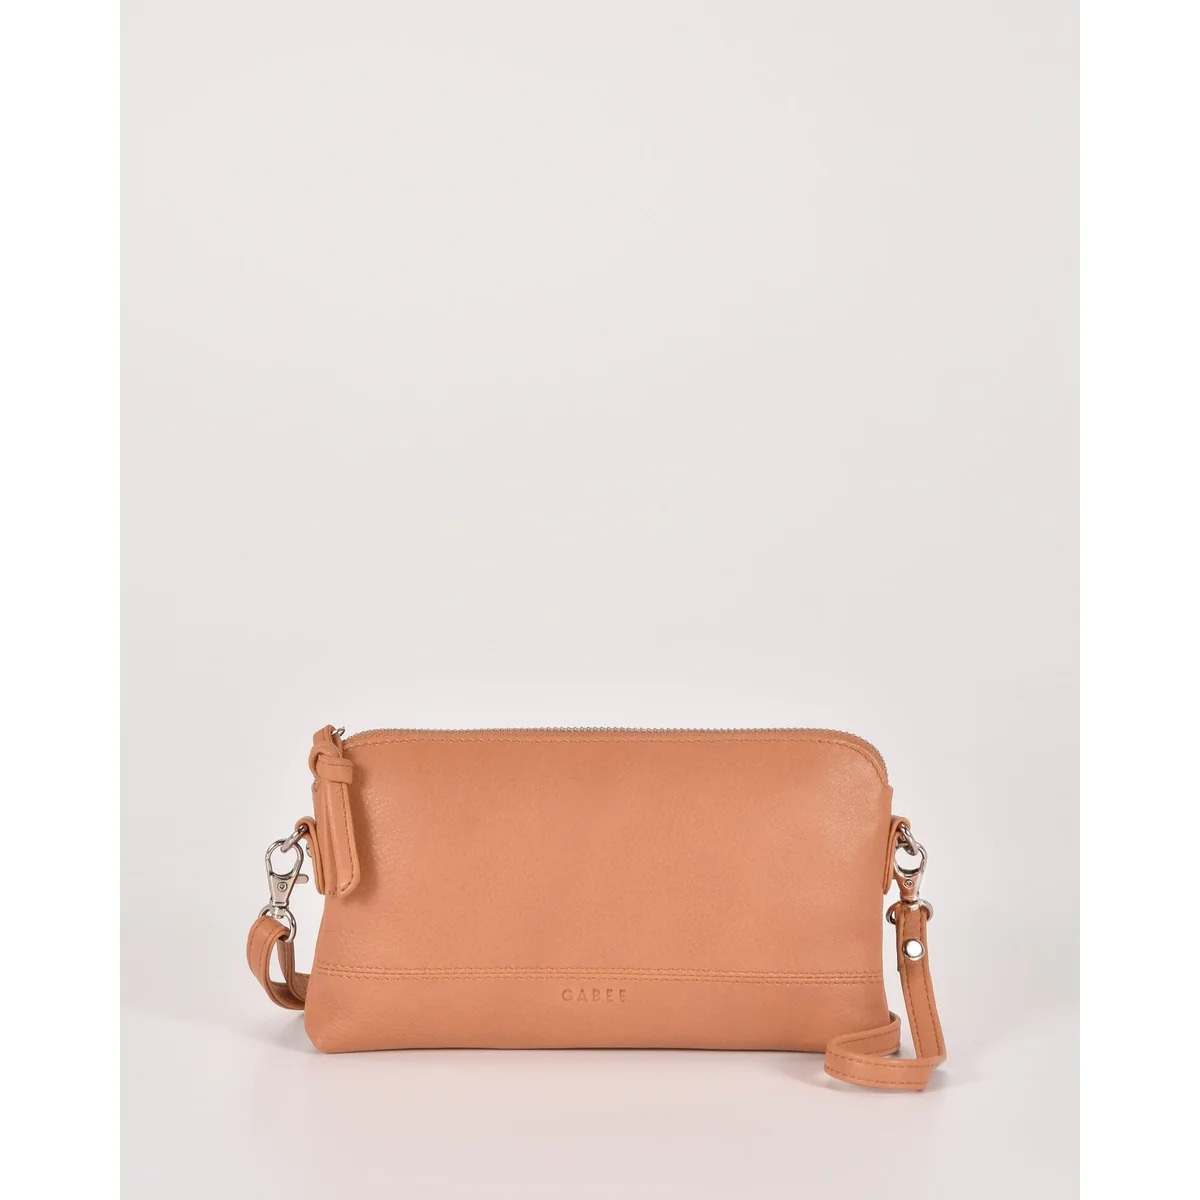 Genuine Soft Leather Womens Crossbody Sling Bag Purse Stylish Multi Colours New | eBay